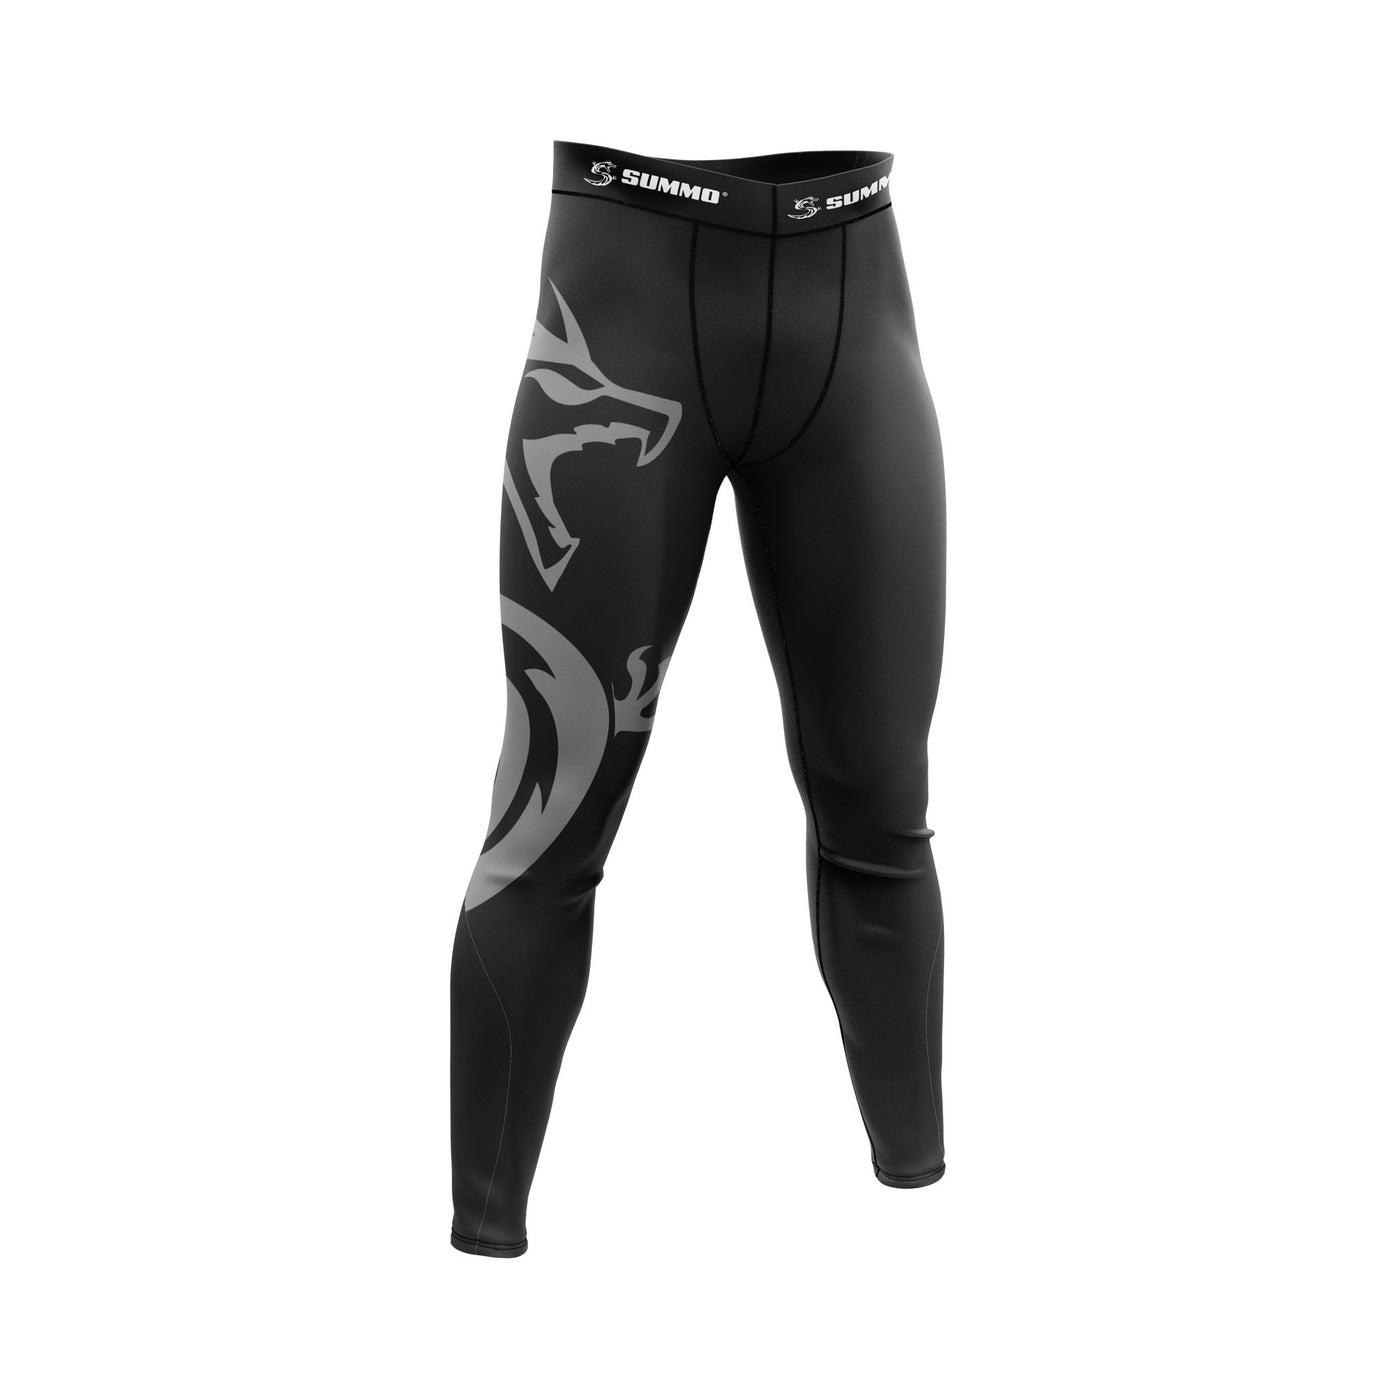 Summo Basic Black Compression Pants for Men/Women - Summo Sports